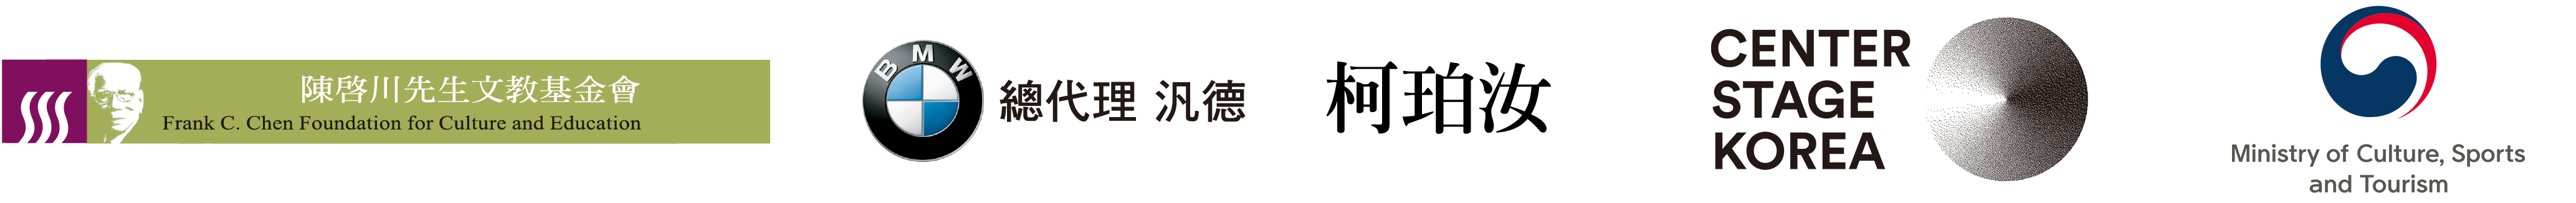 Logo:Frank C. Chen Foundation for Culture and Education、BMW、KE,PO-RU、CENRER SATGE KOREA